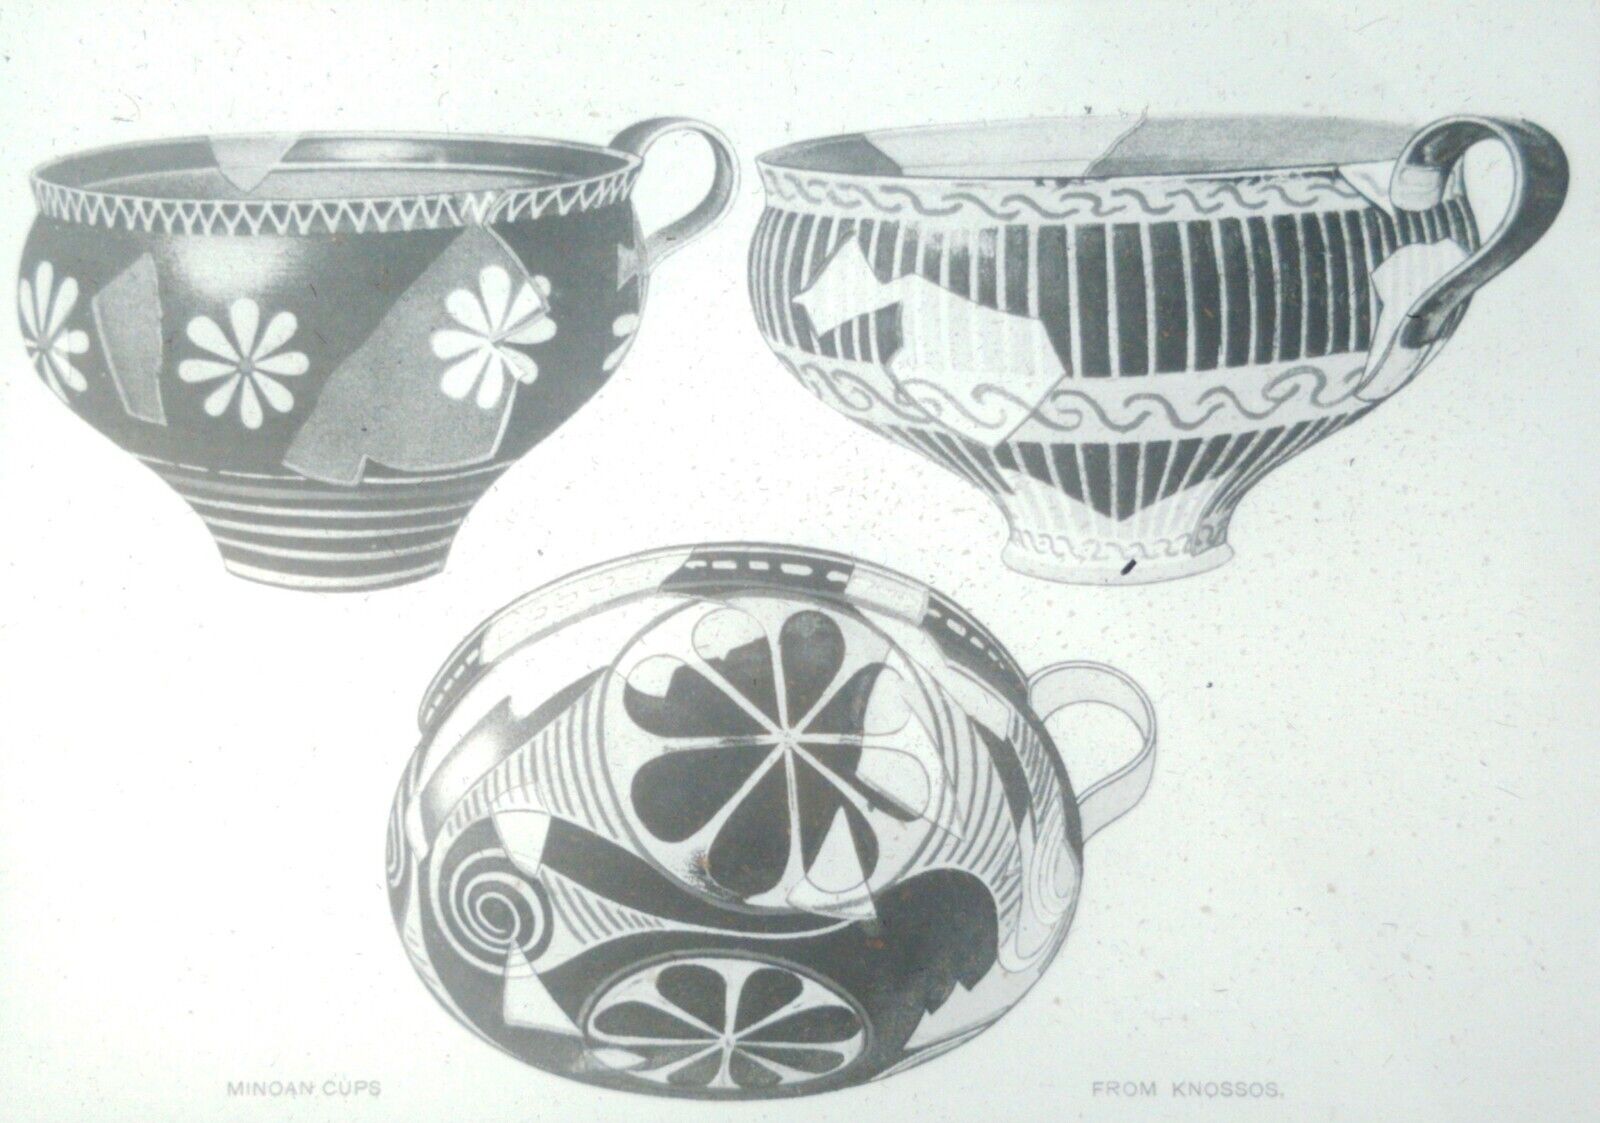 Minoan Cups, Kamares Ware, Knossos Aegean Art Pottery, Magic Lantern Glass Slide